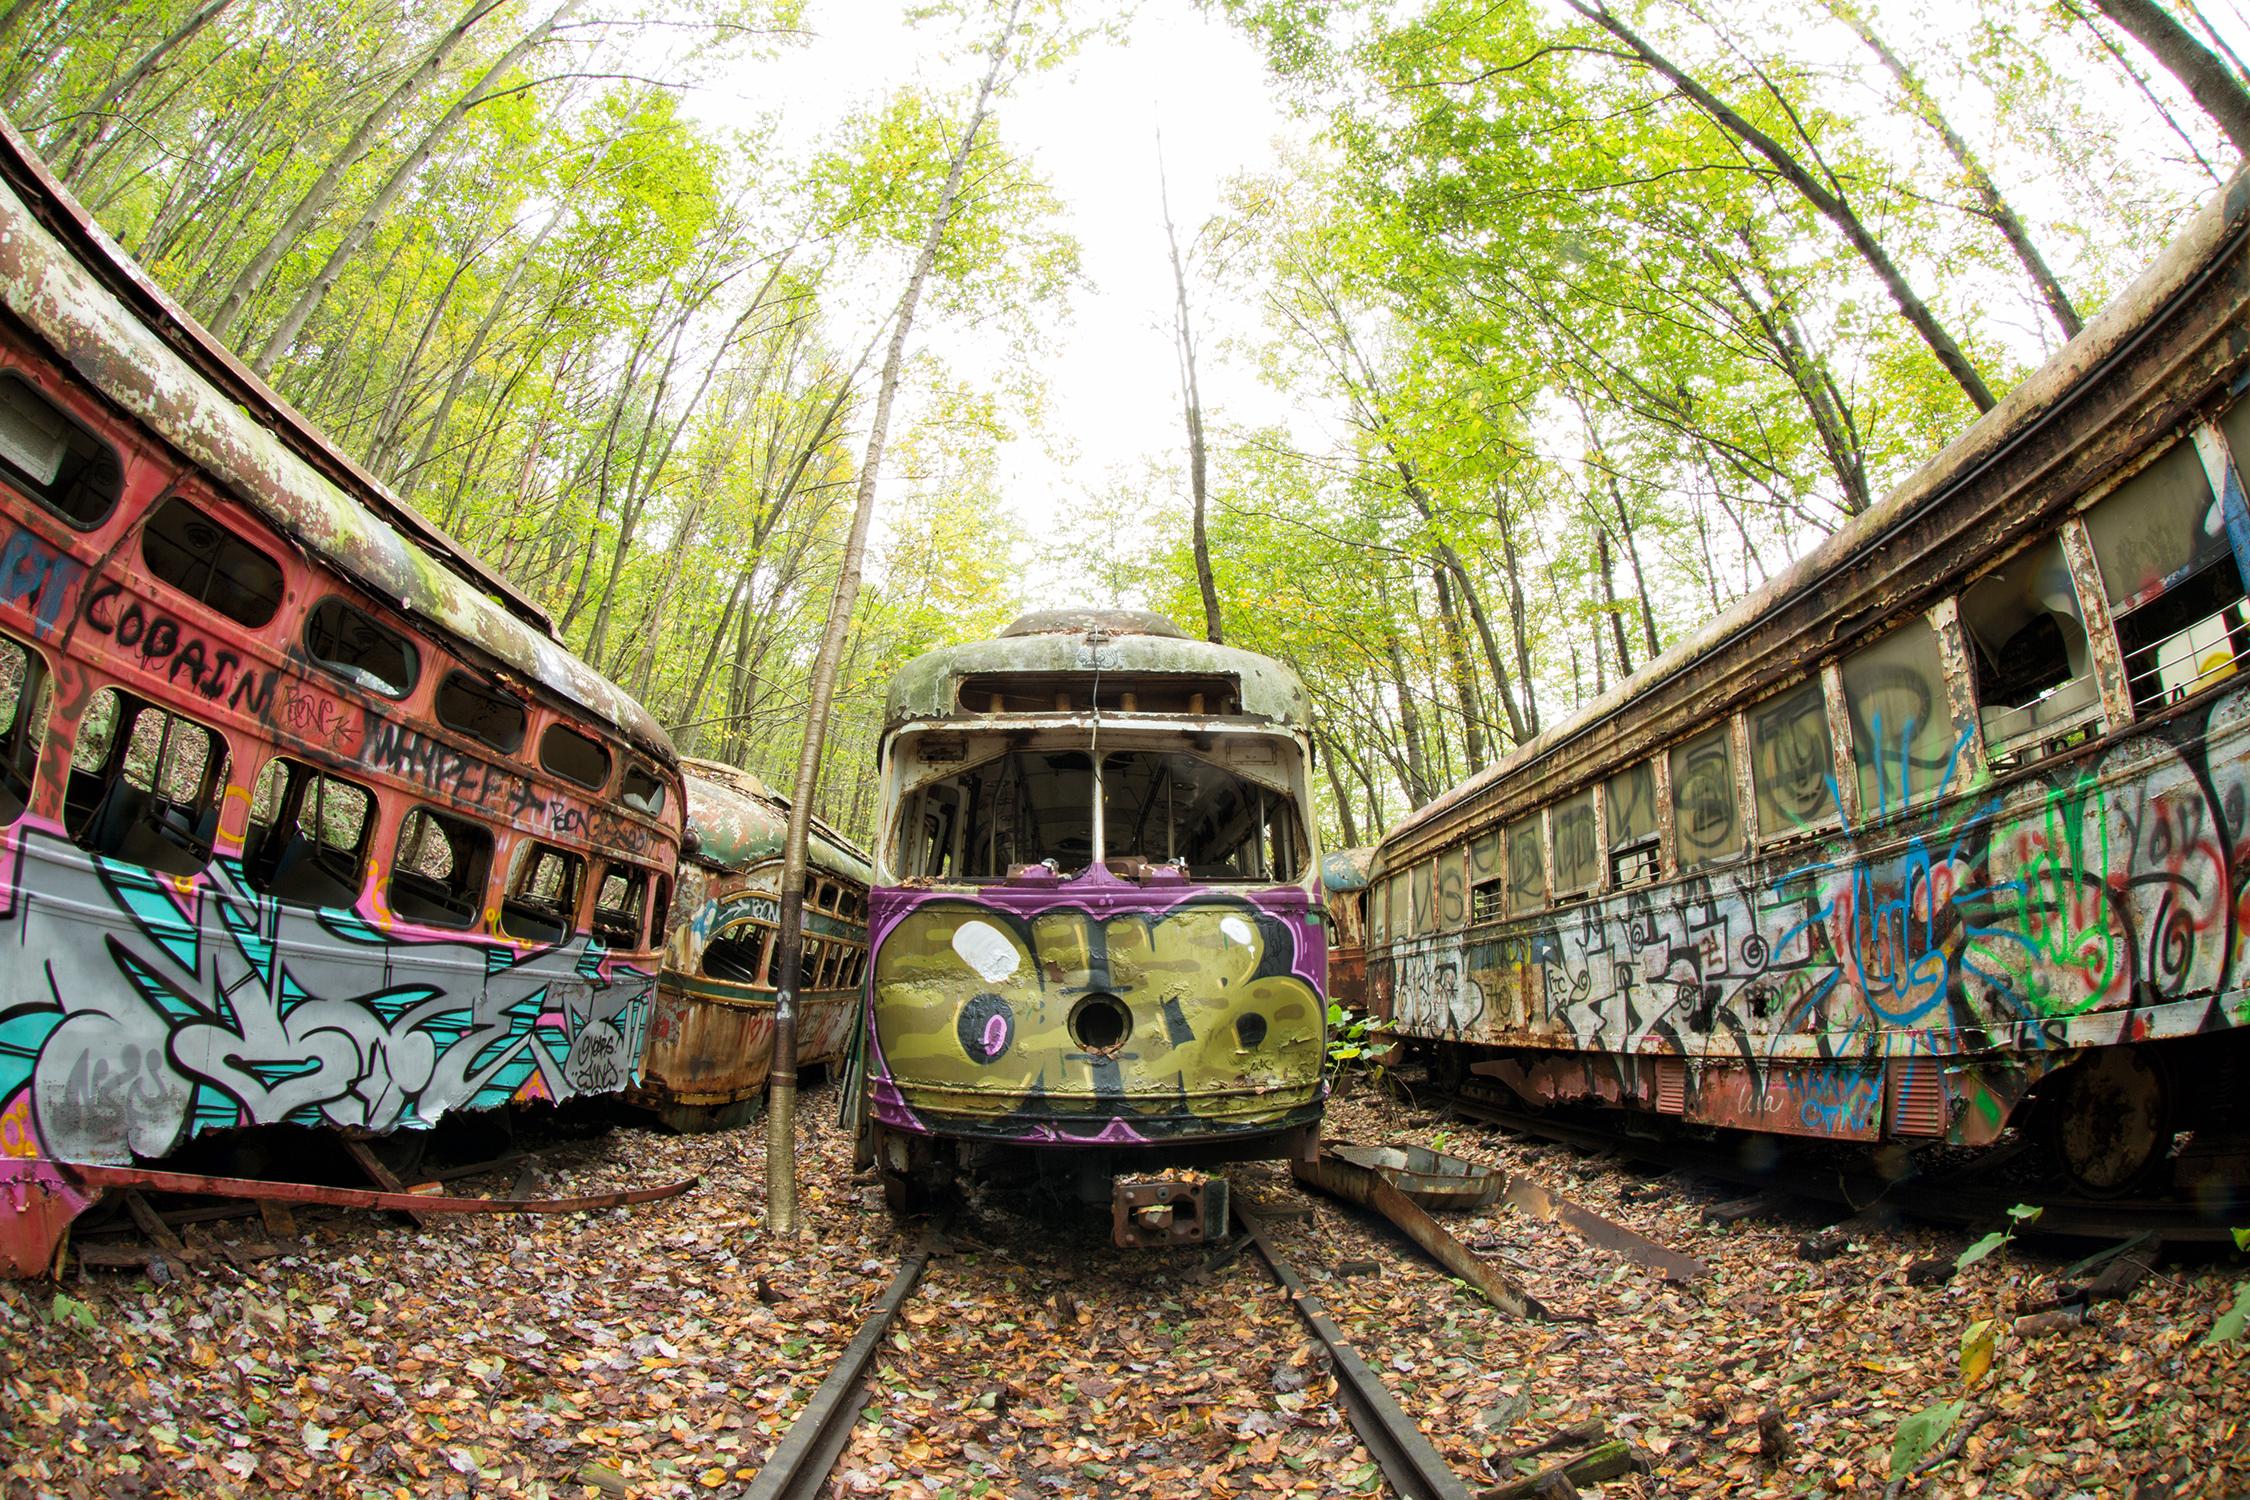 Rebecca Skinner Color Photograph - "Graffiti Yard", abandoned, trolley, landscape, rusty, train, color photograph